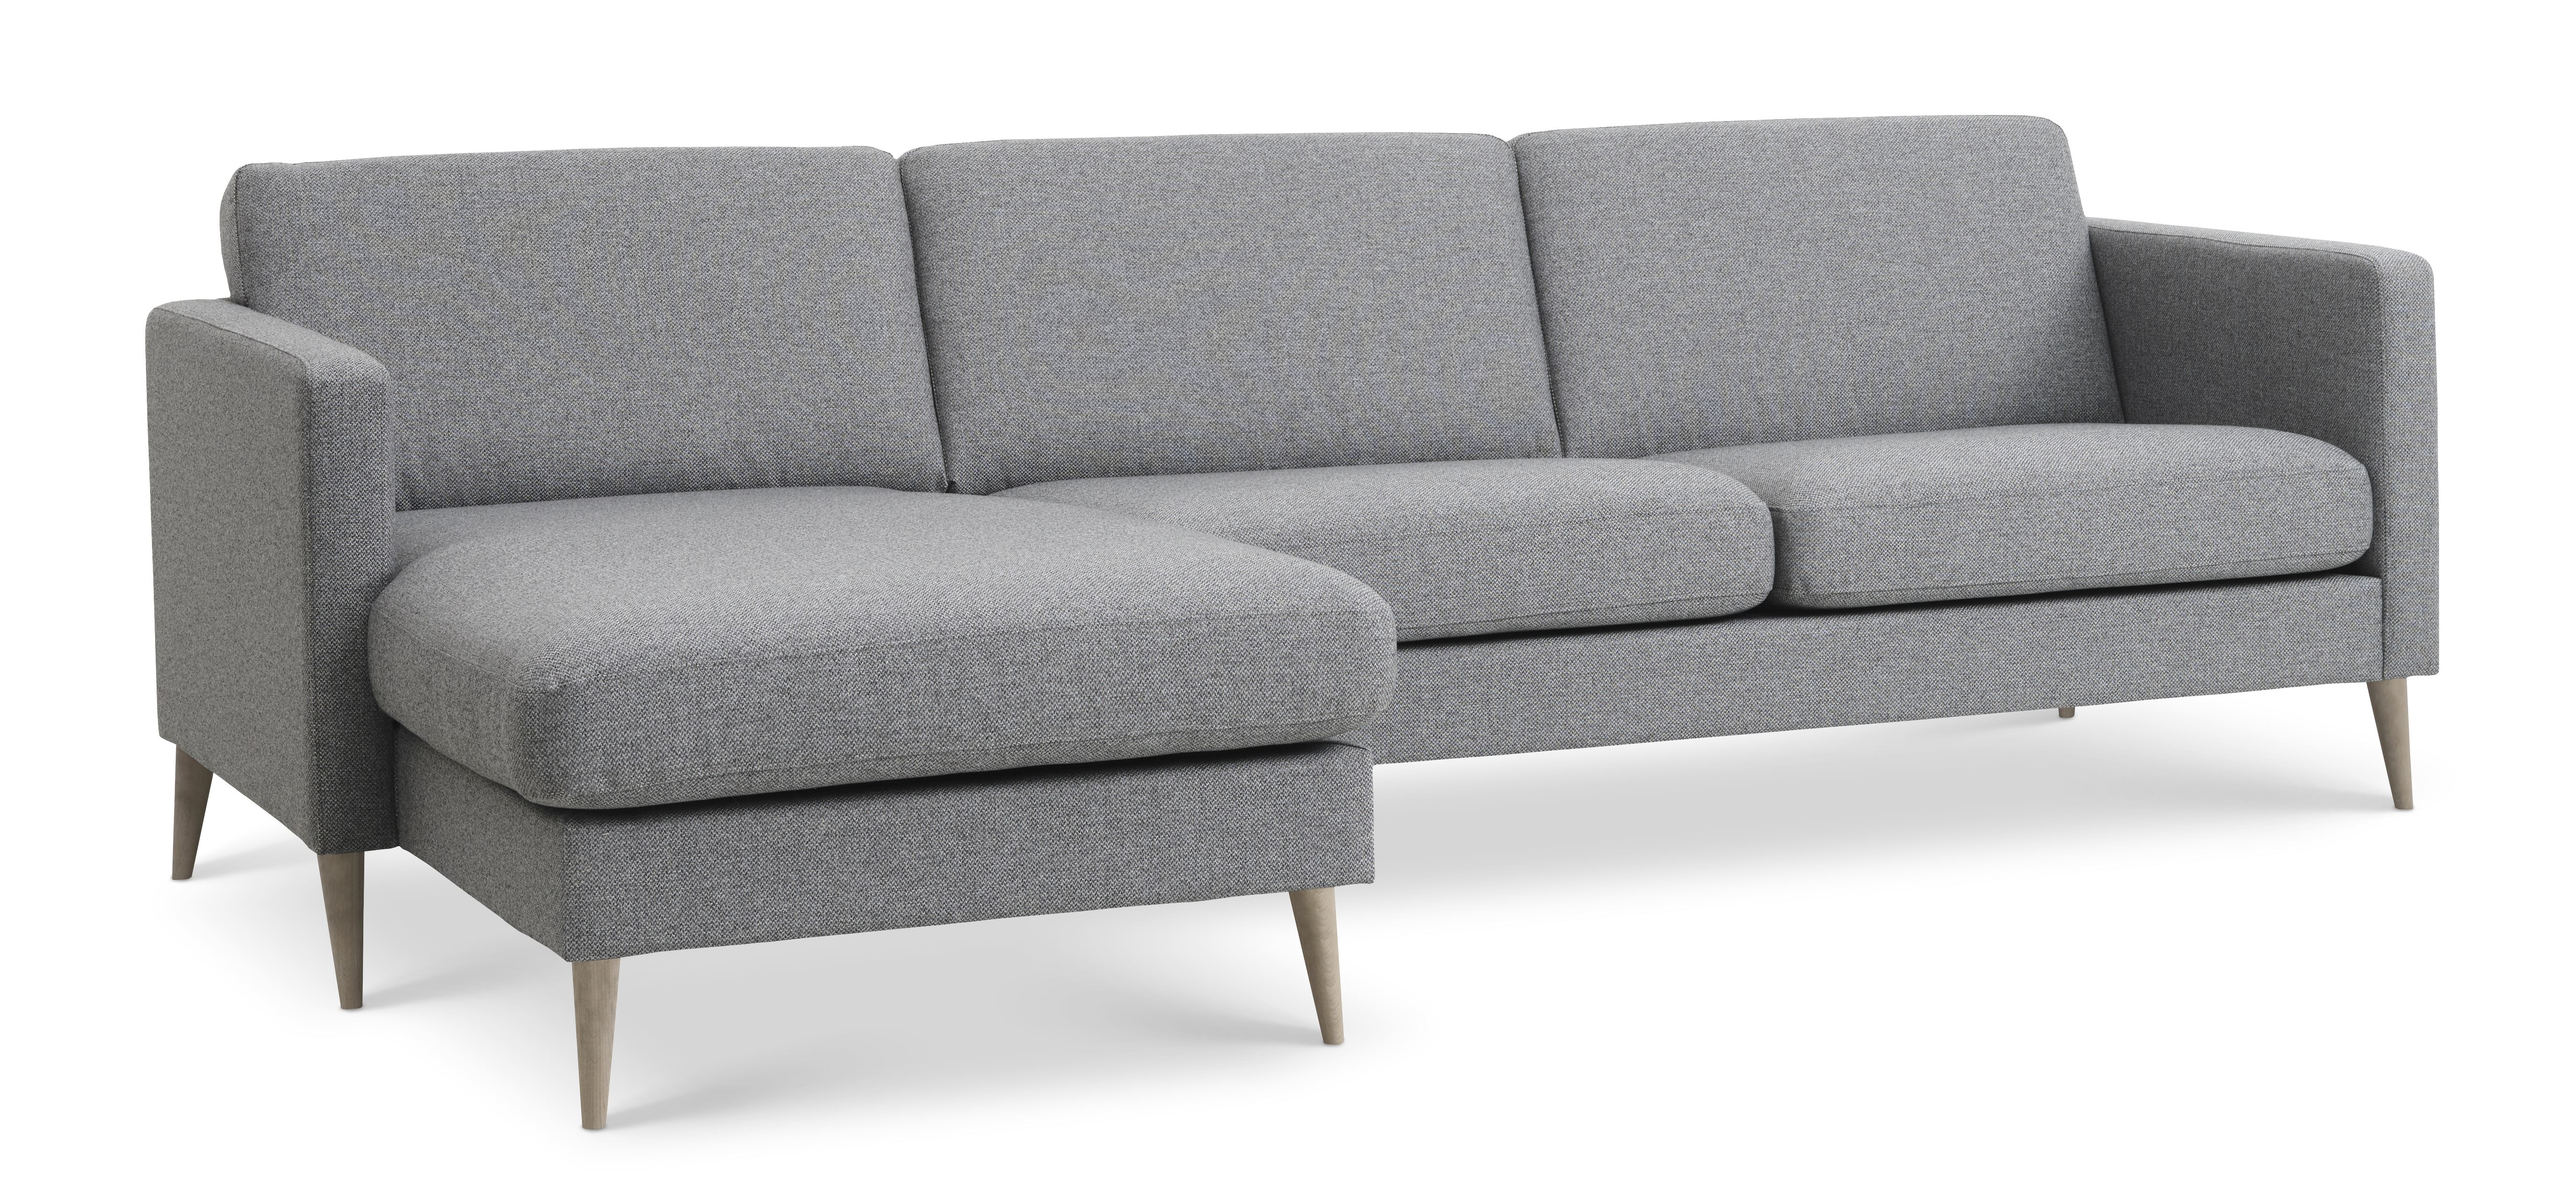 Ask sæt 51 3D sofa, m. chaiselong - lys granitgrå polyester stof og natur træ